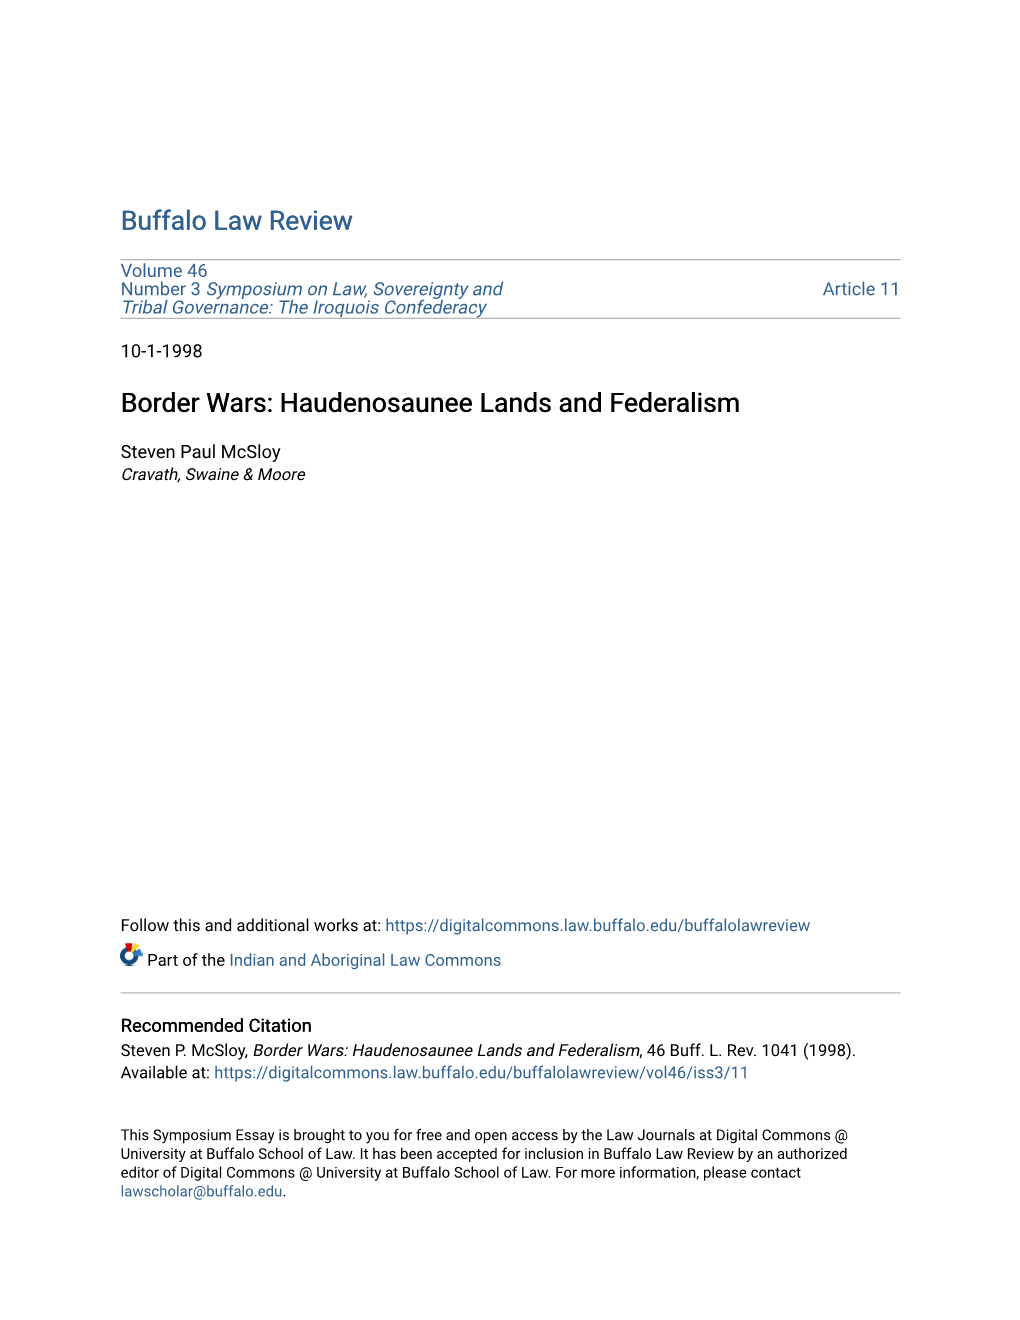 Border Wars: Haudenosaunee Lands and Federalism